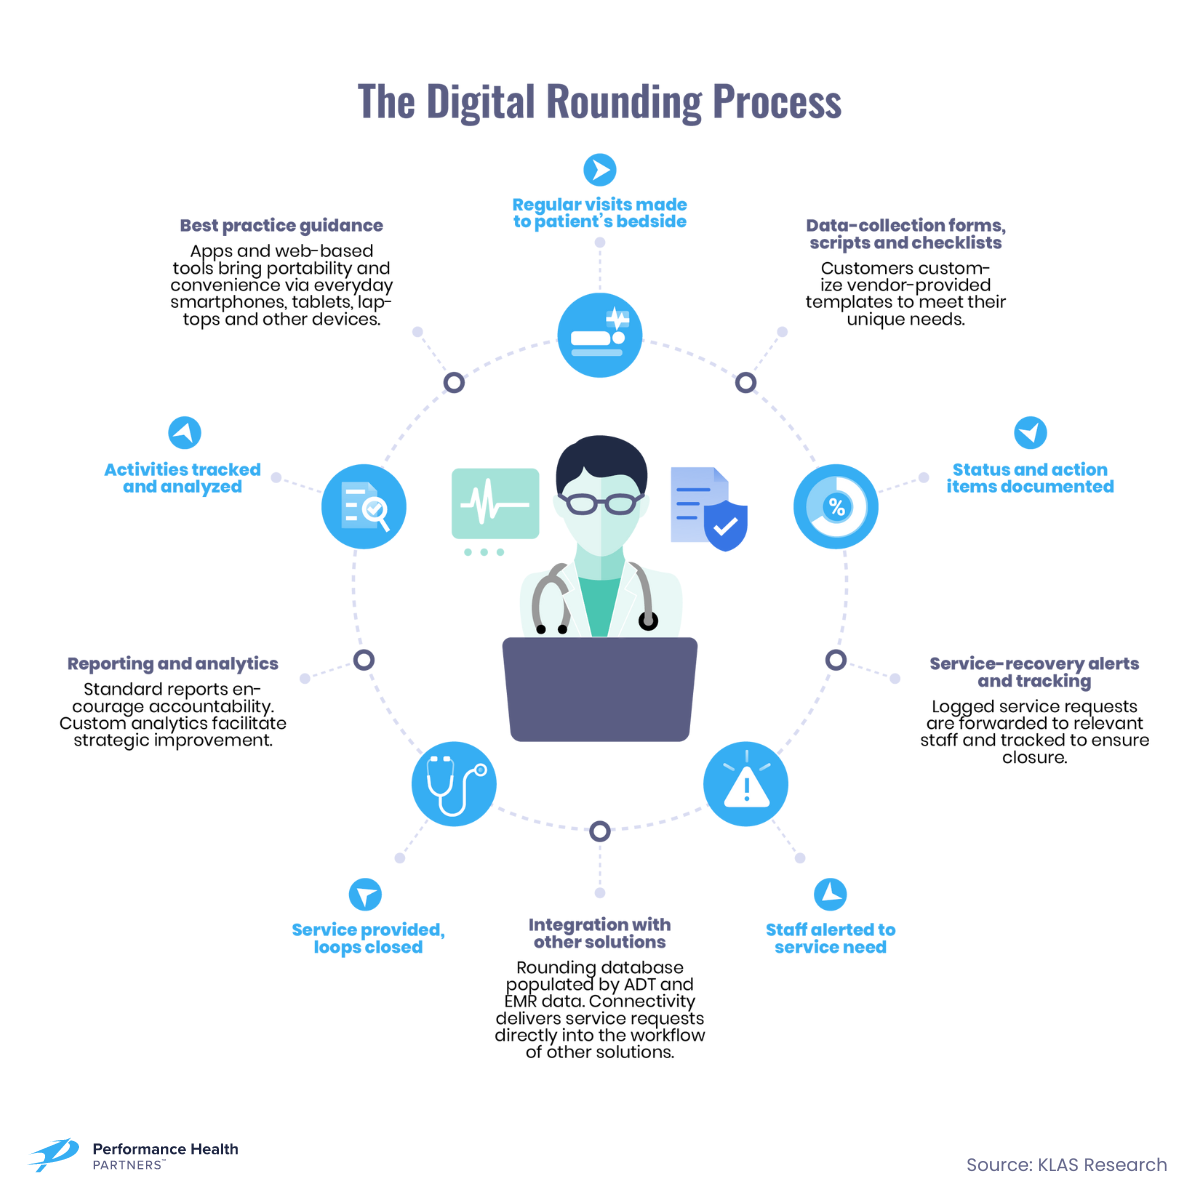 The Digital Rounding Process